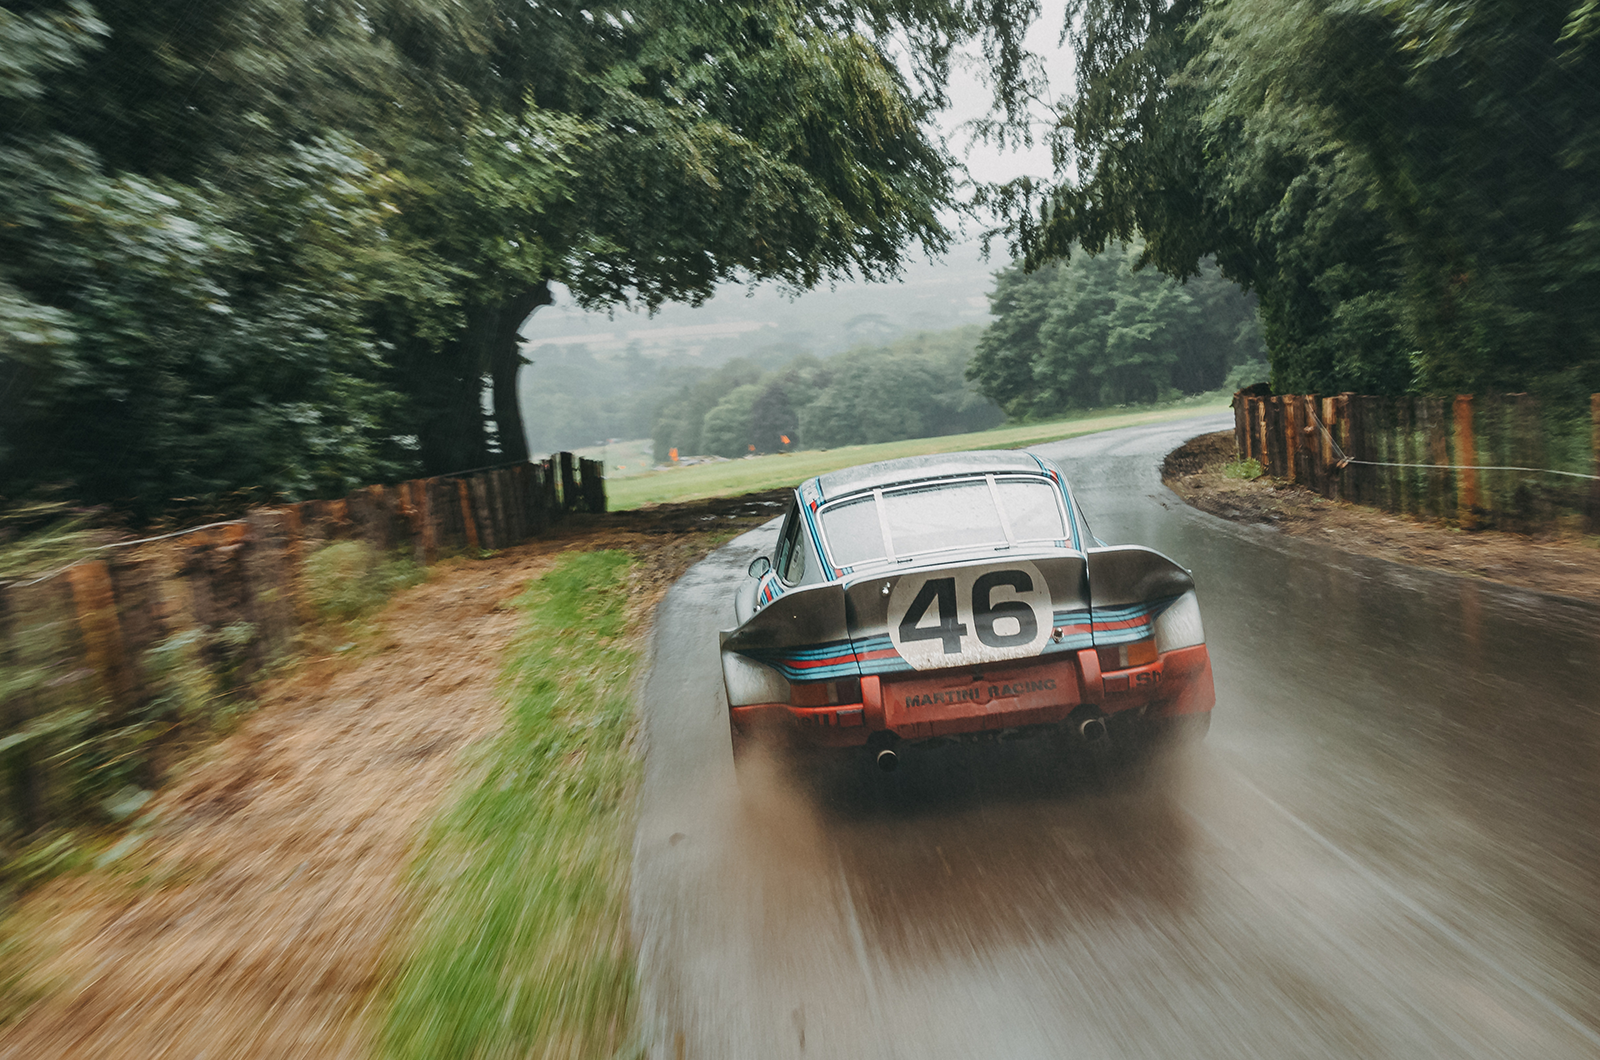 Exclusive Porsche 911 RSR drive coming soon – Classic & Sports Car